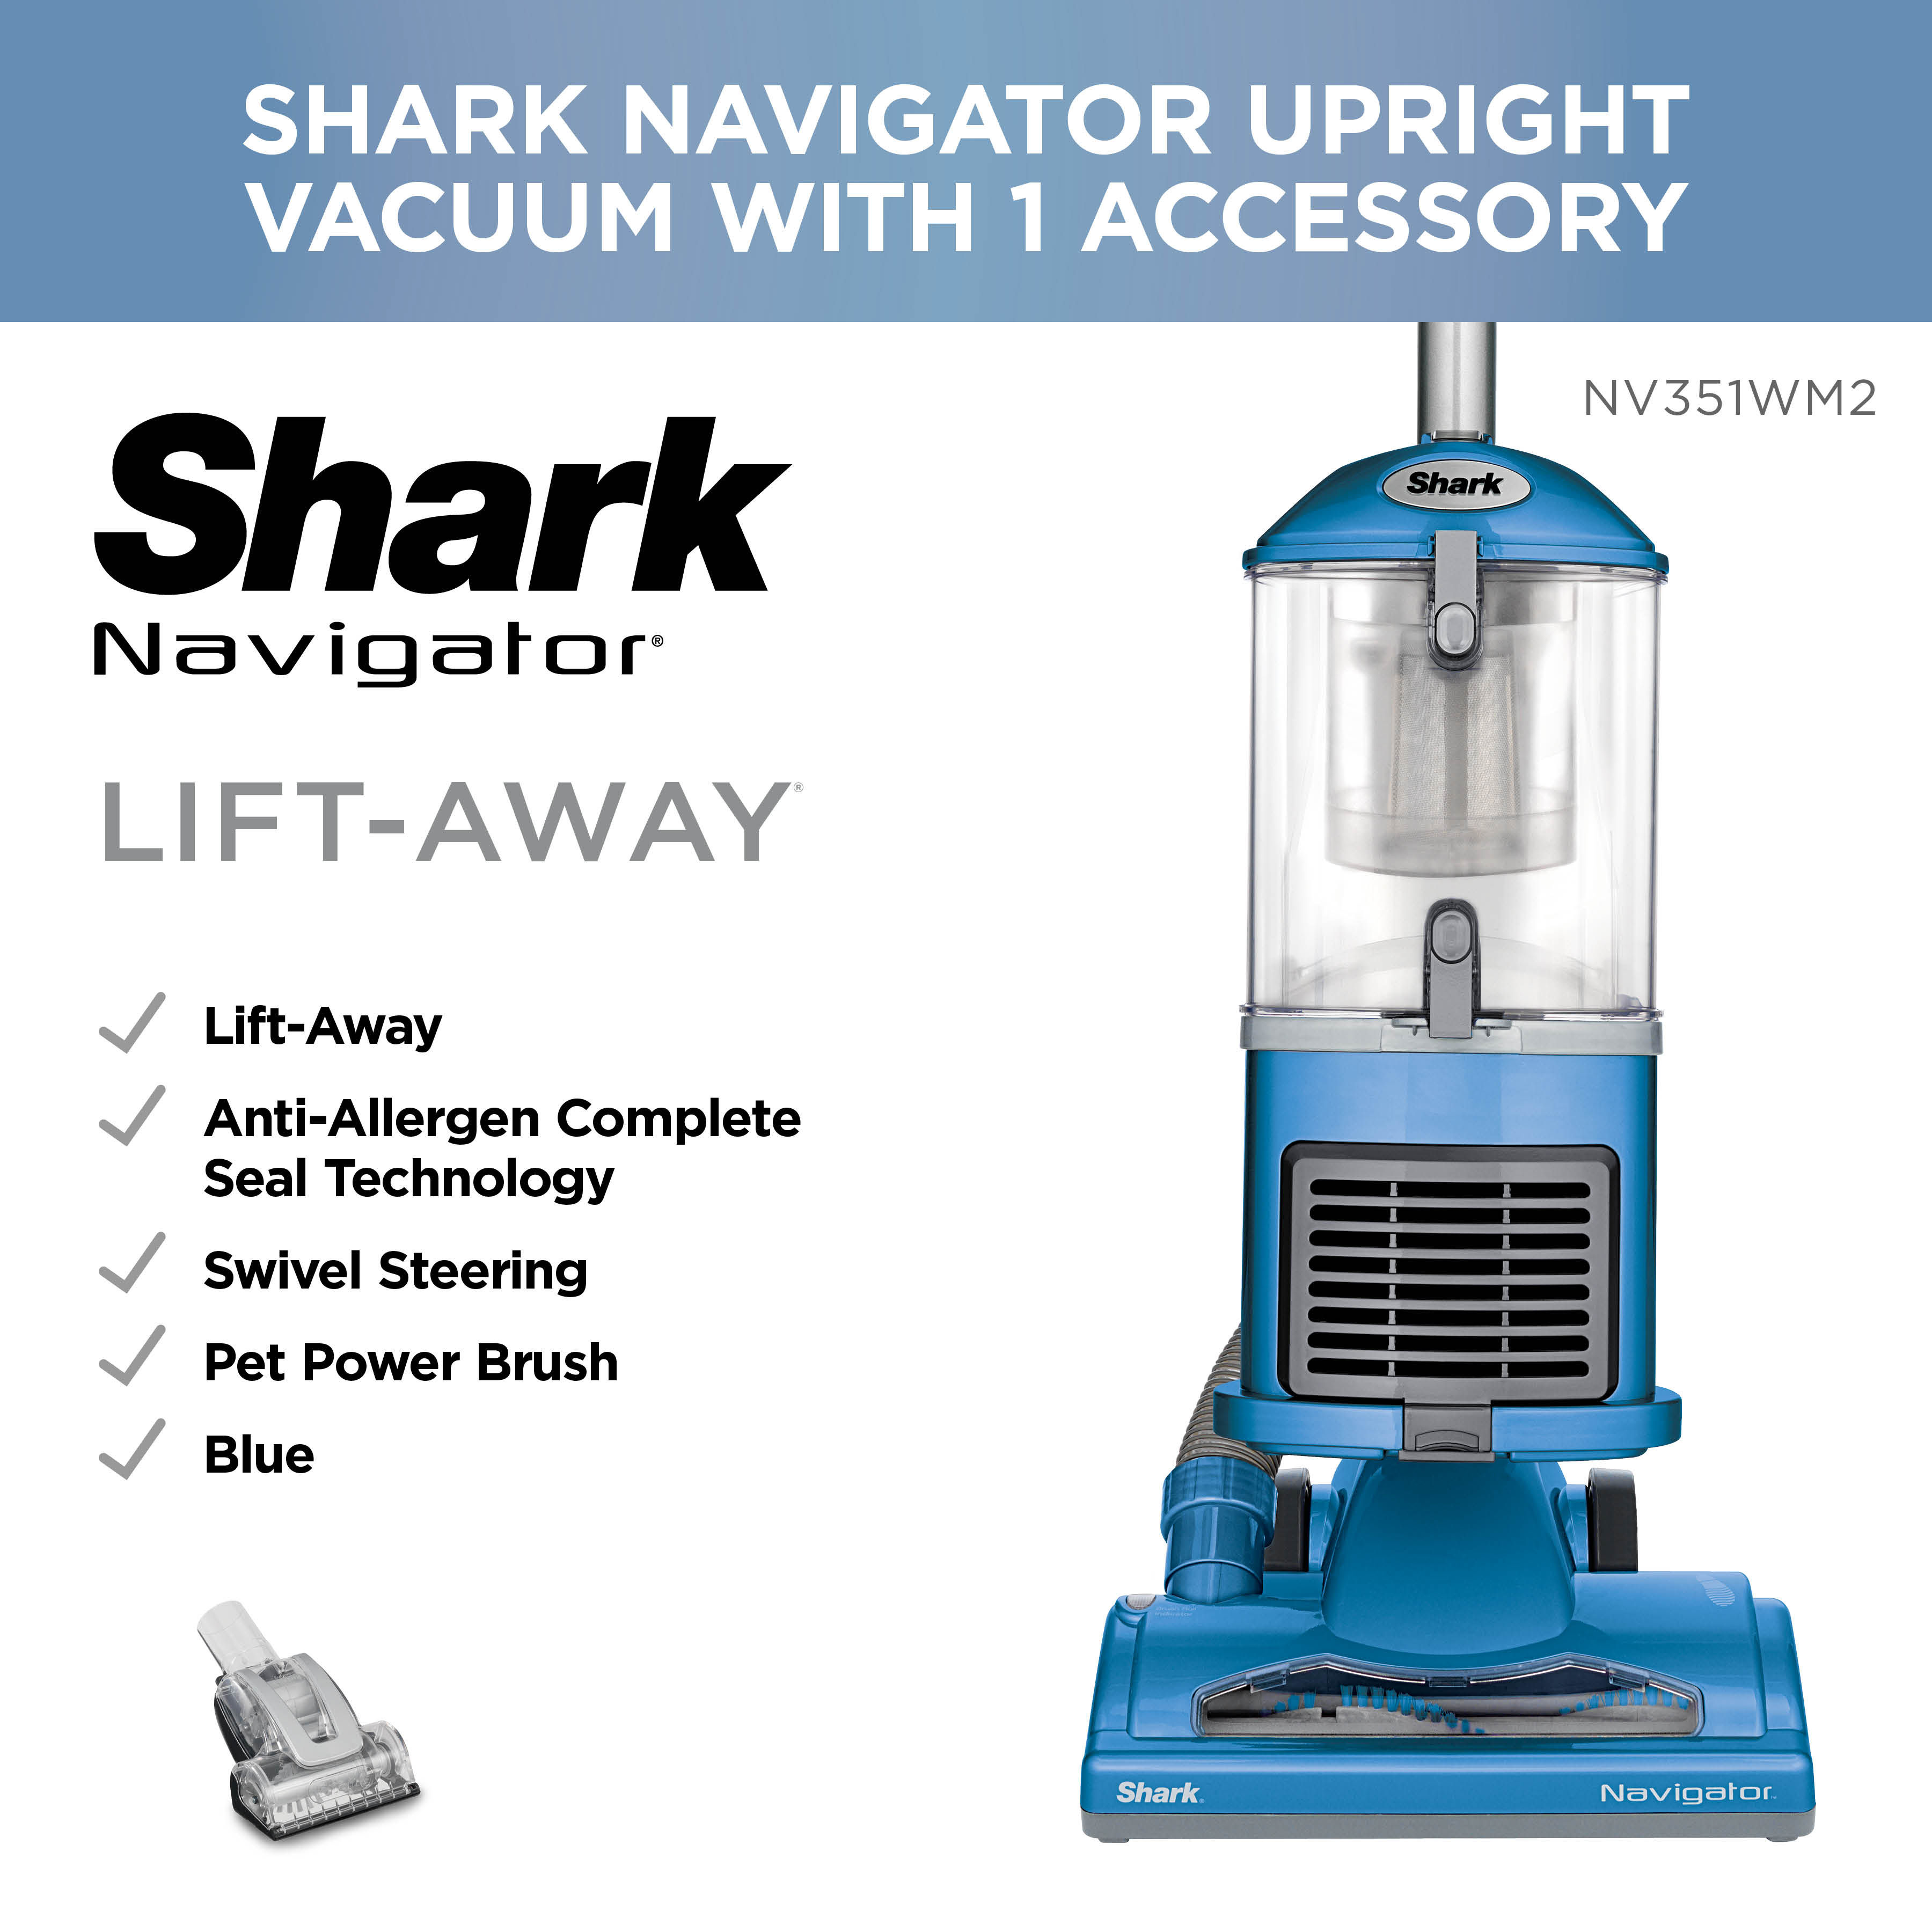 Shark Navigator Lift-Away Upright Vacuum Healthy Home Edition, NV351WM2 - image 6 of 6